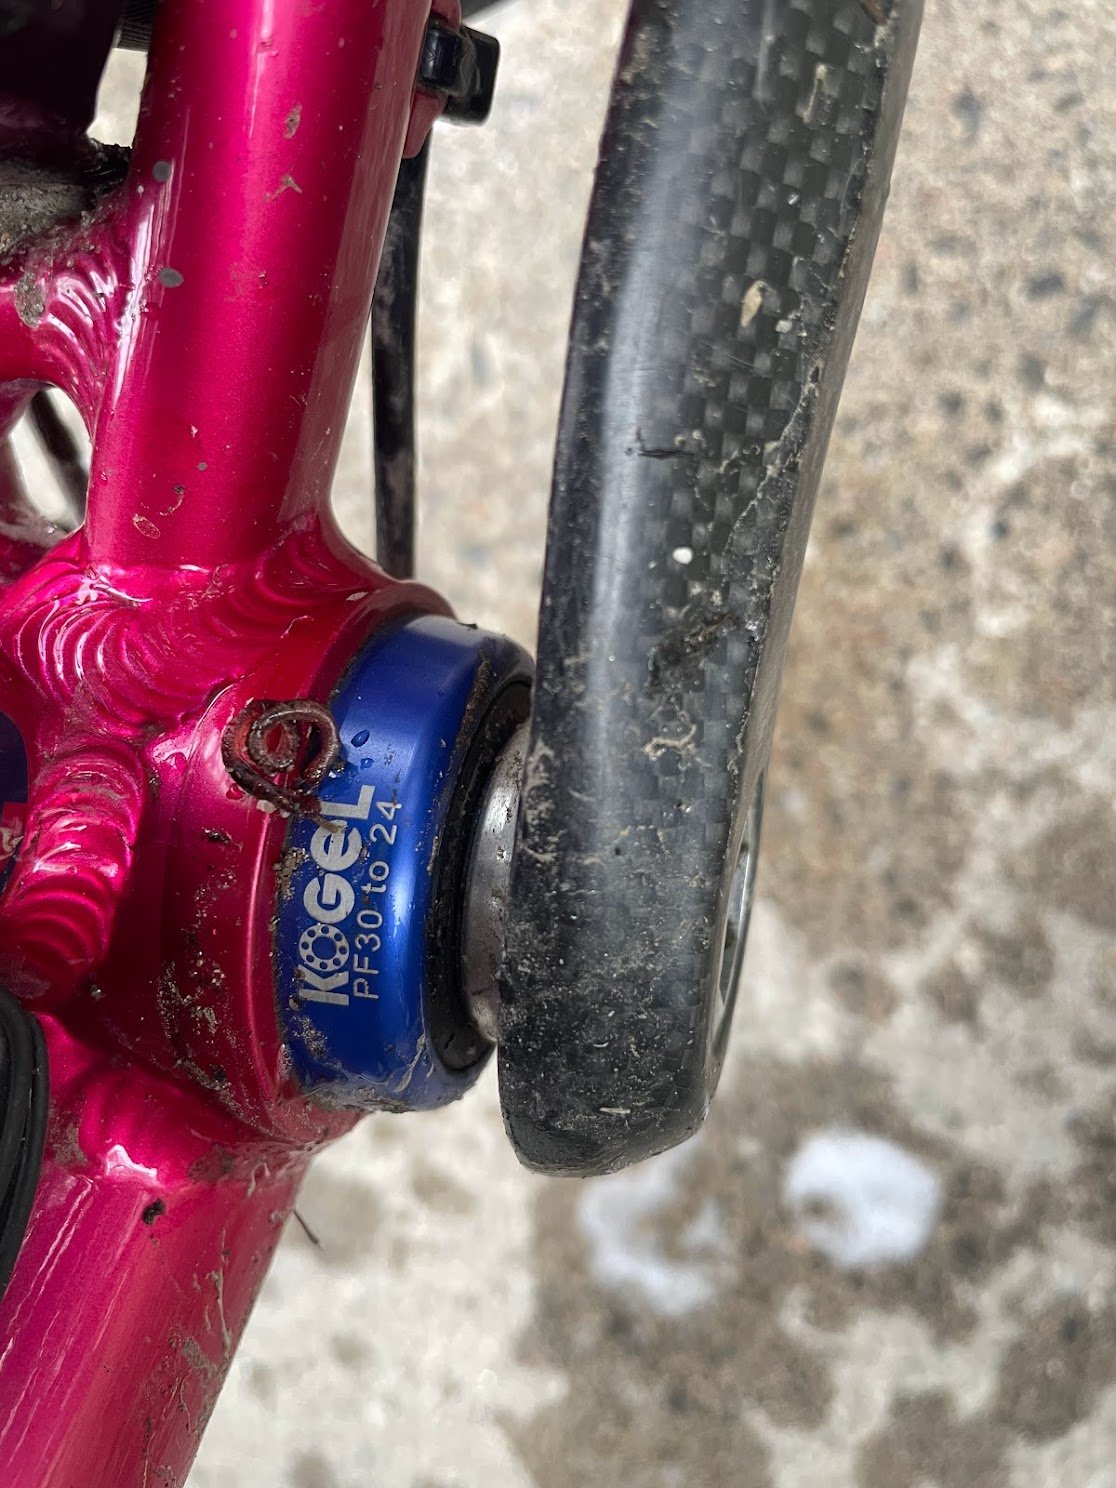 Kogel ceramic bearings with cyclocross seals: appropriate.